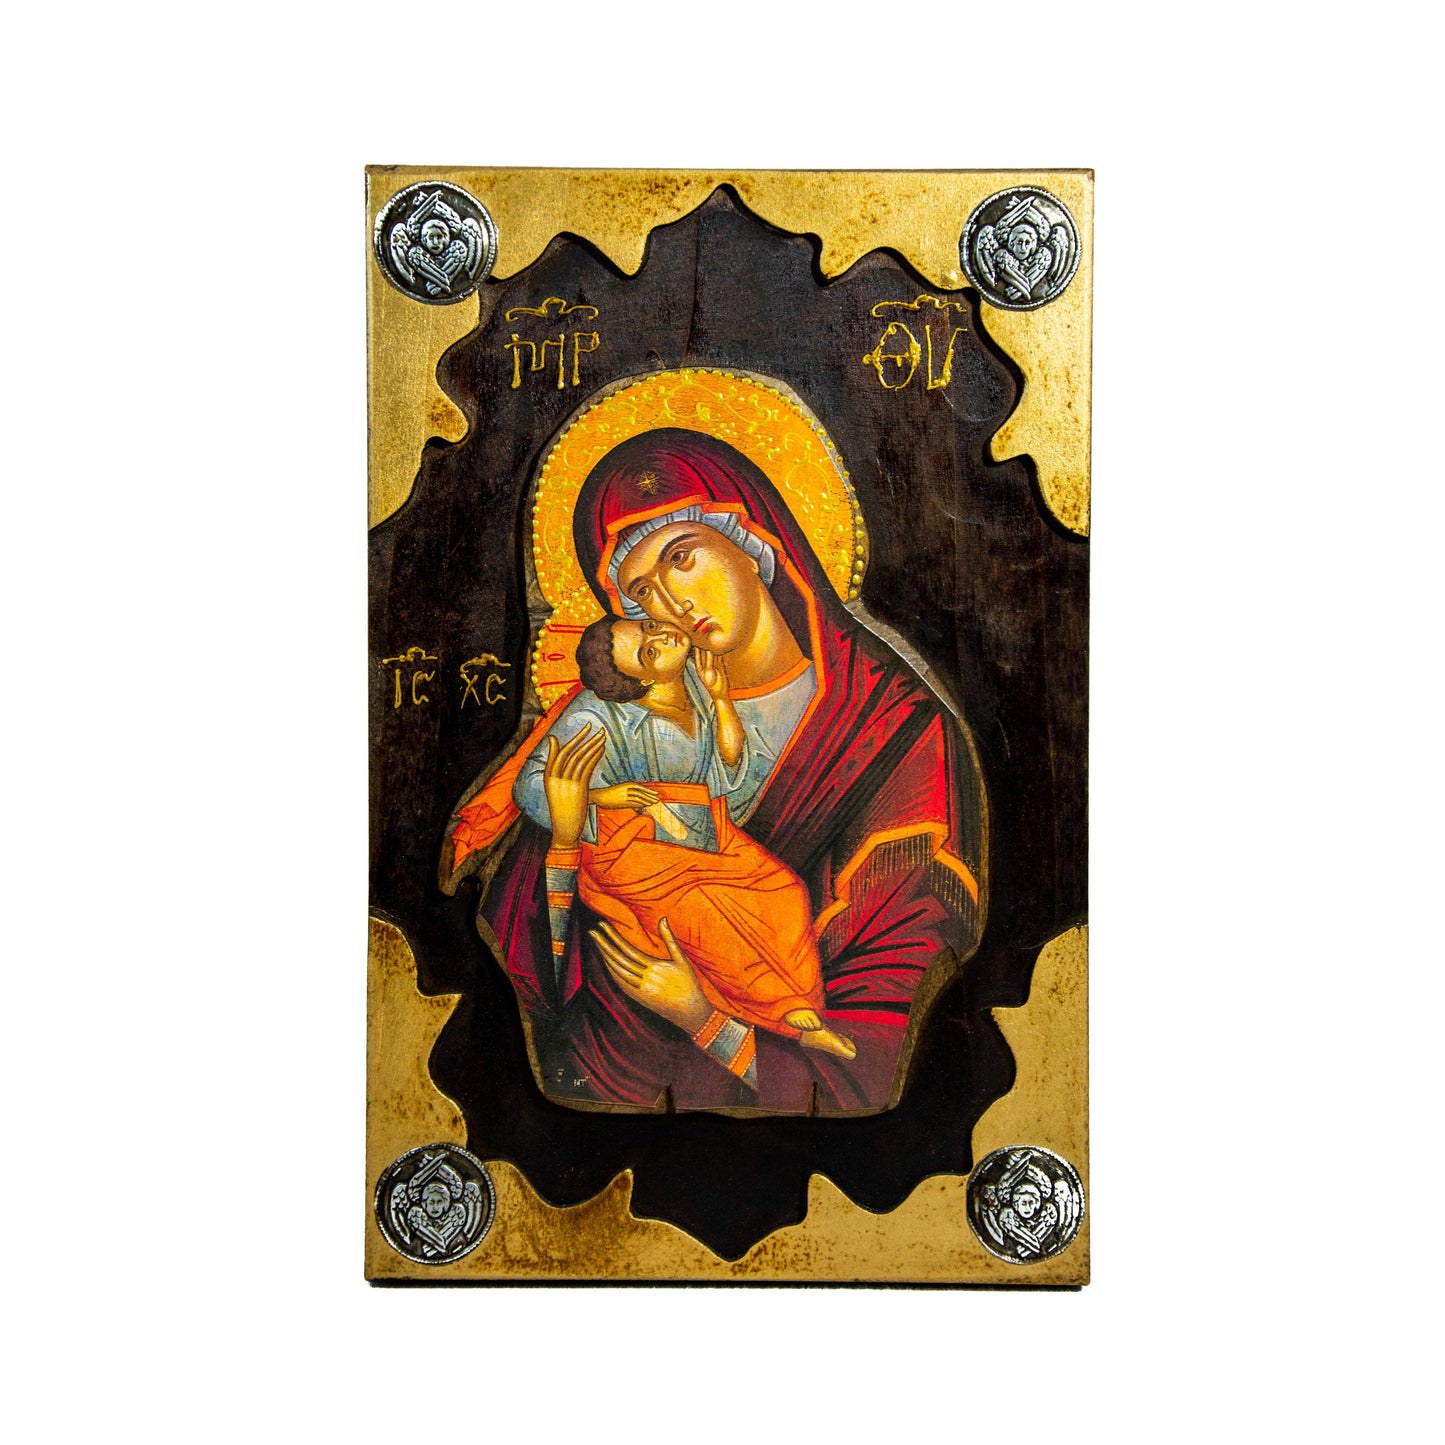 Virgin Mary icon Panagia Handmade Greek Christian Orthodox Icon gold paint Theotokos Mother of God Byzantine wall hanging wood plaque 38x25cm TheHolyArt